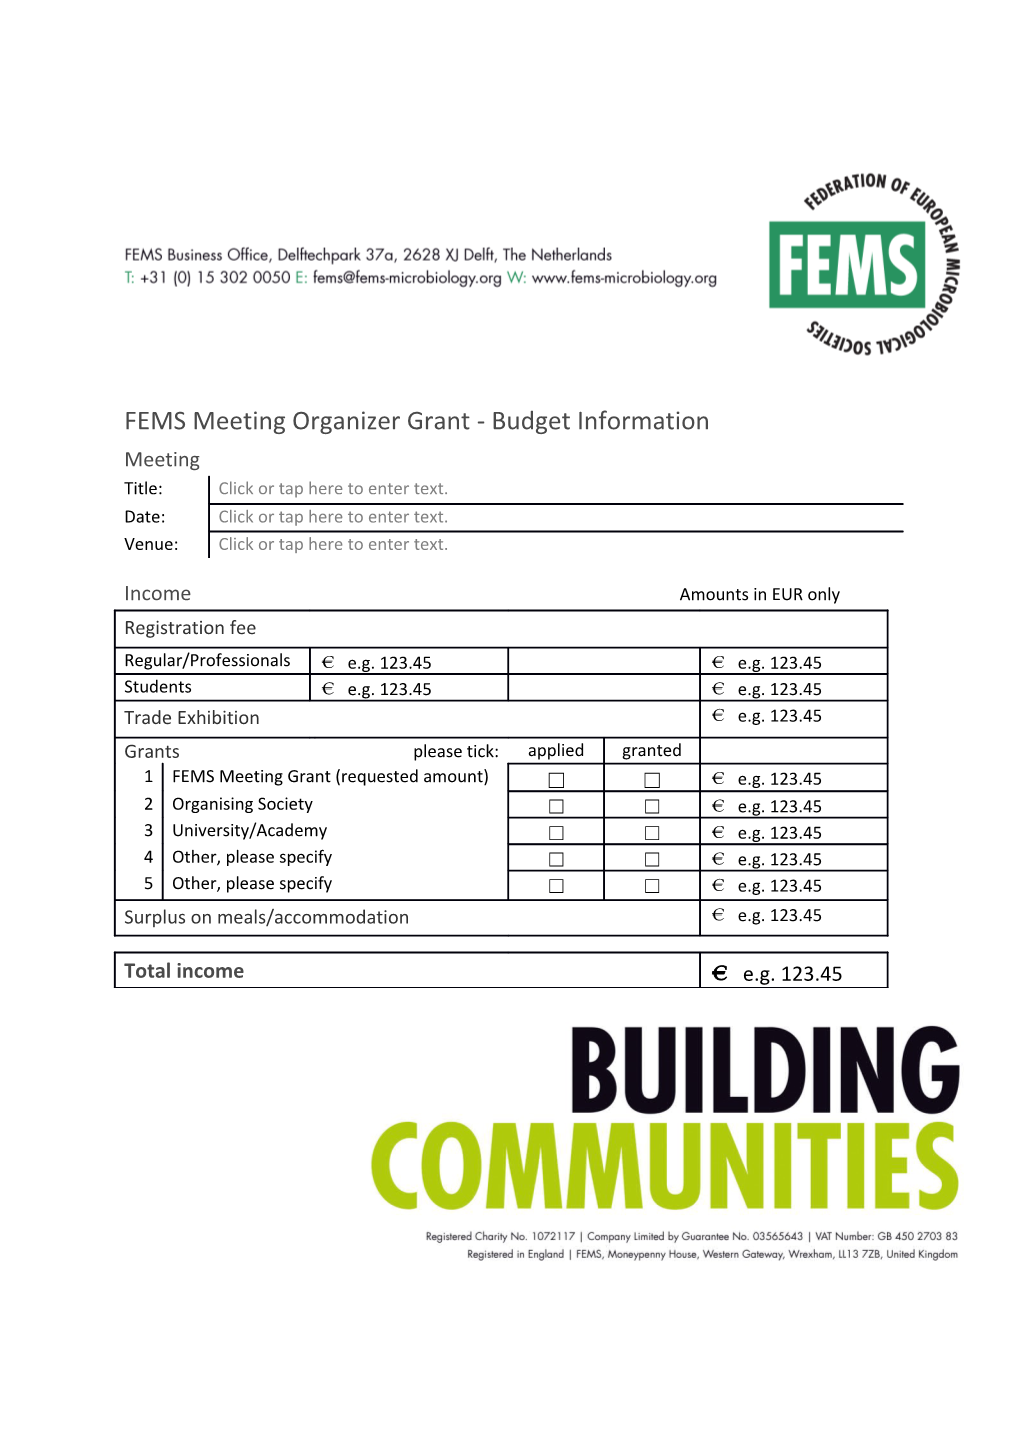 FEMS Meeting Organizer Grant - Budget Information